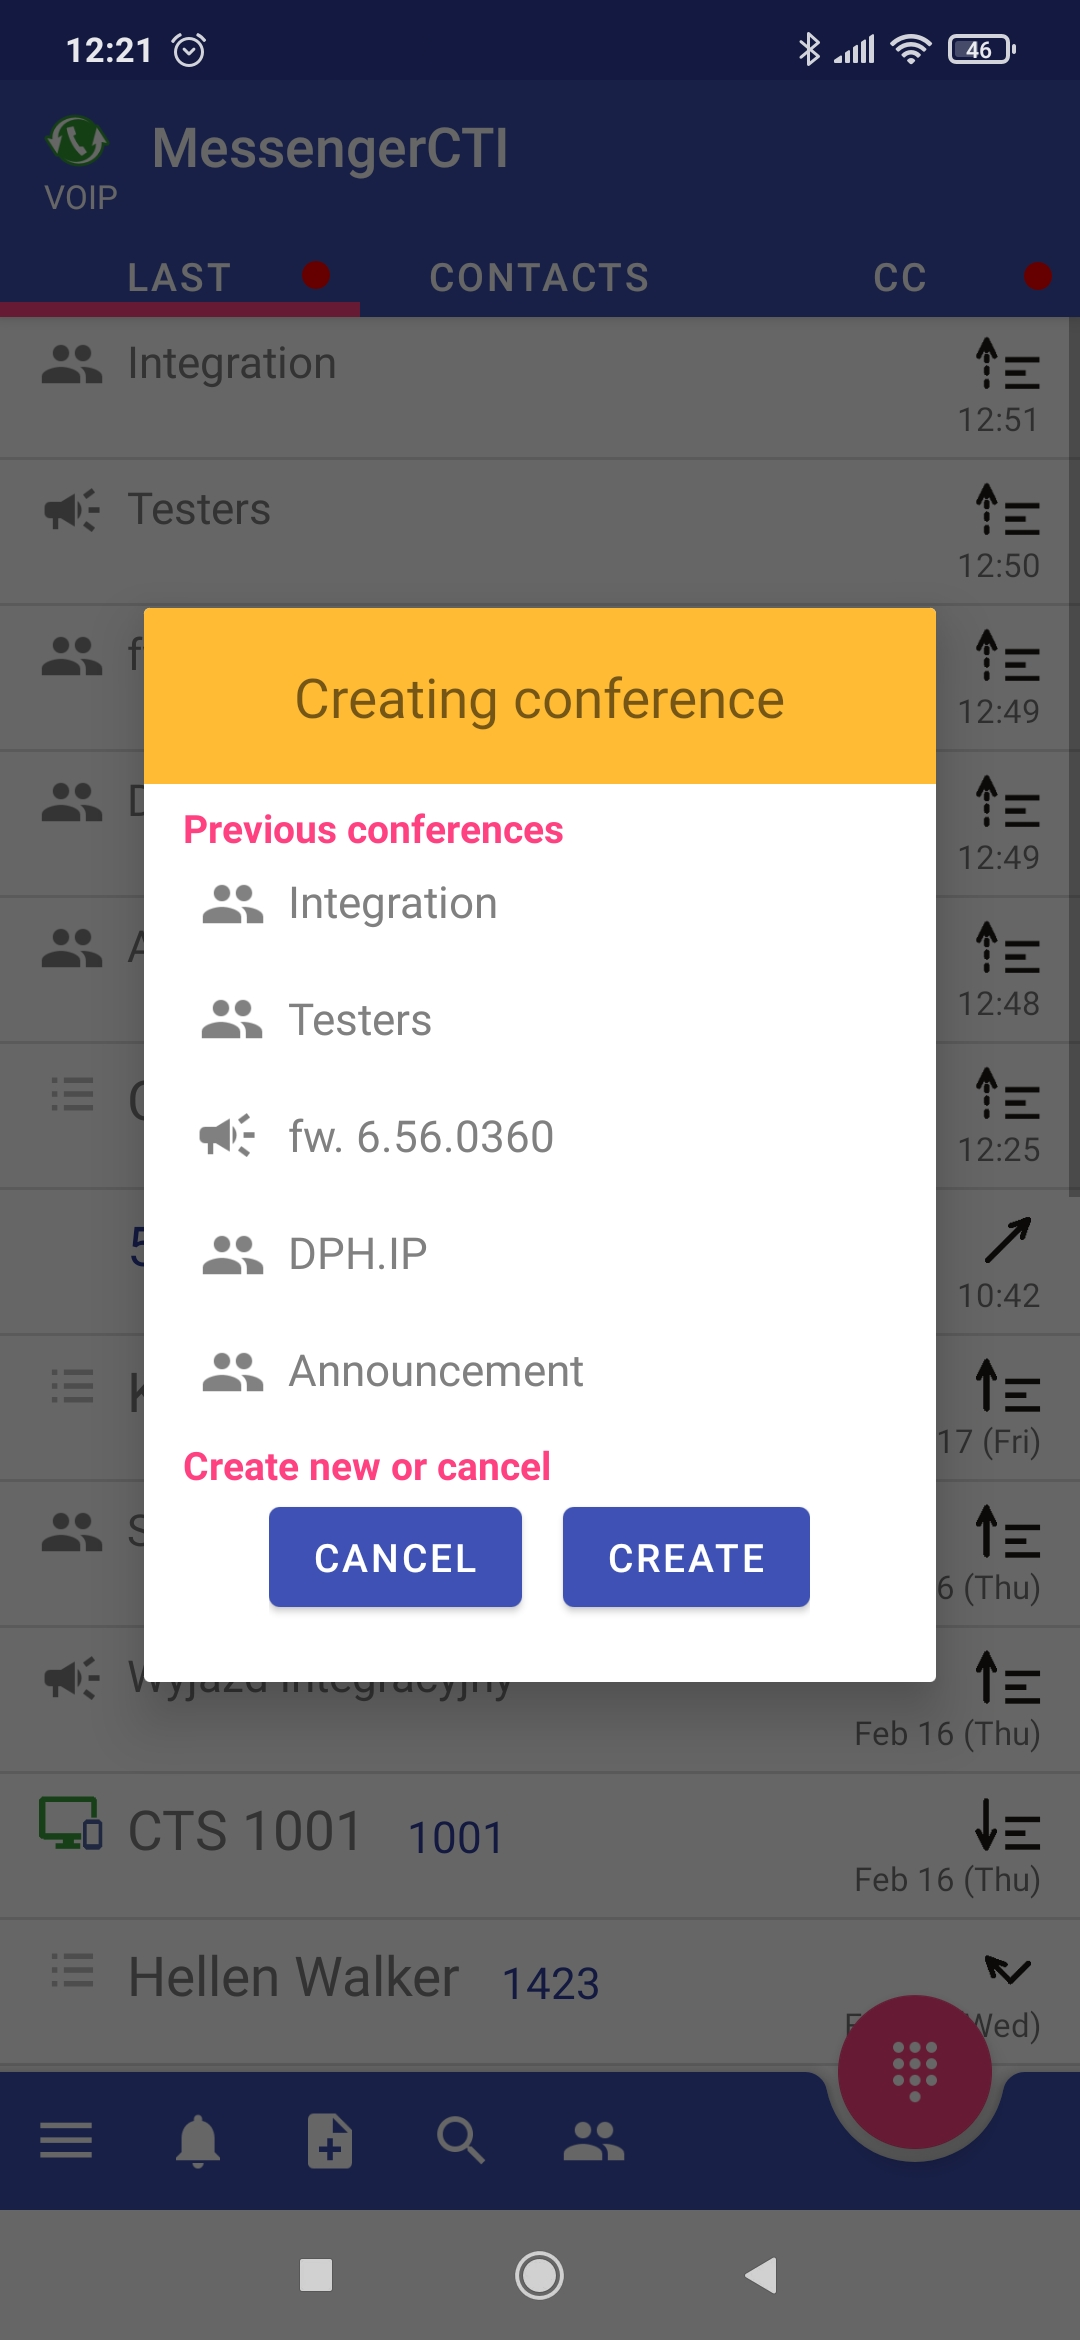 MessengerCTI.mobile 1.08 Conference1 en.png